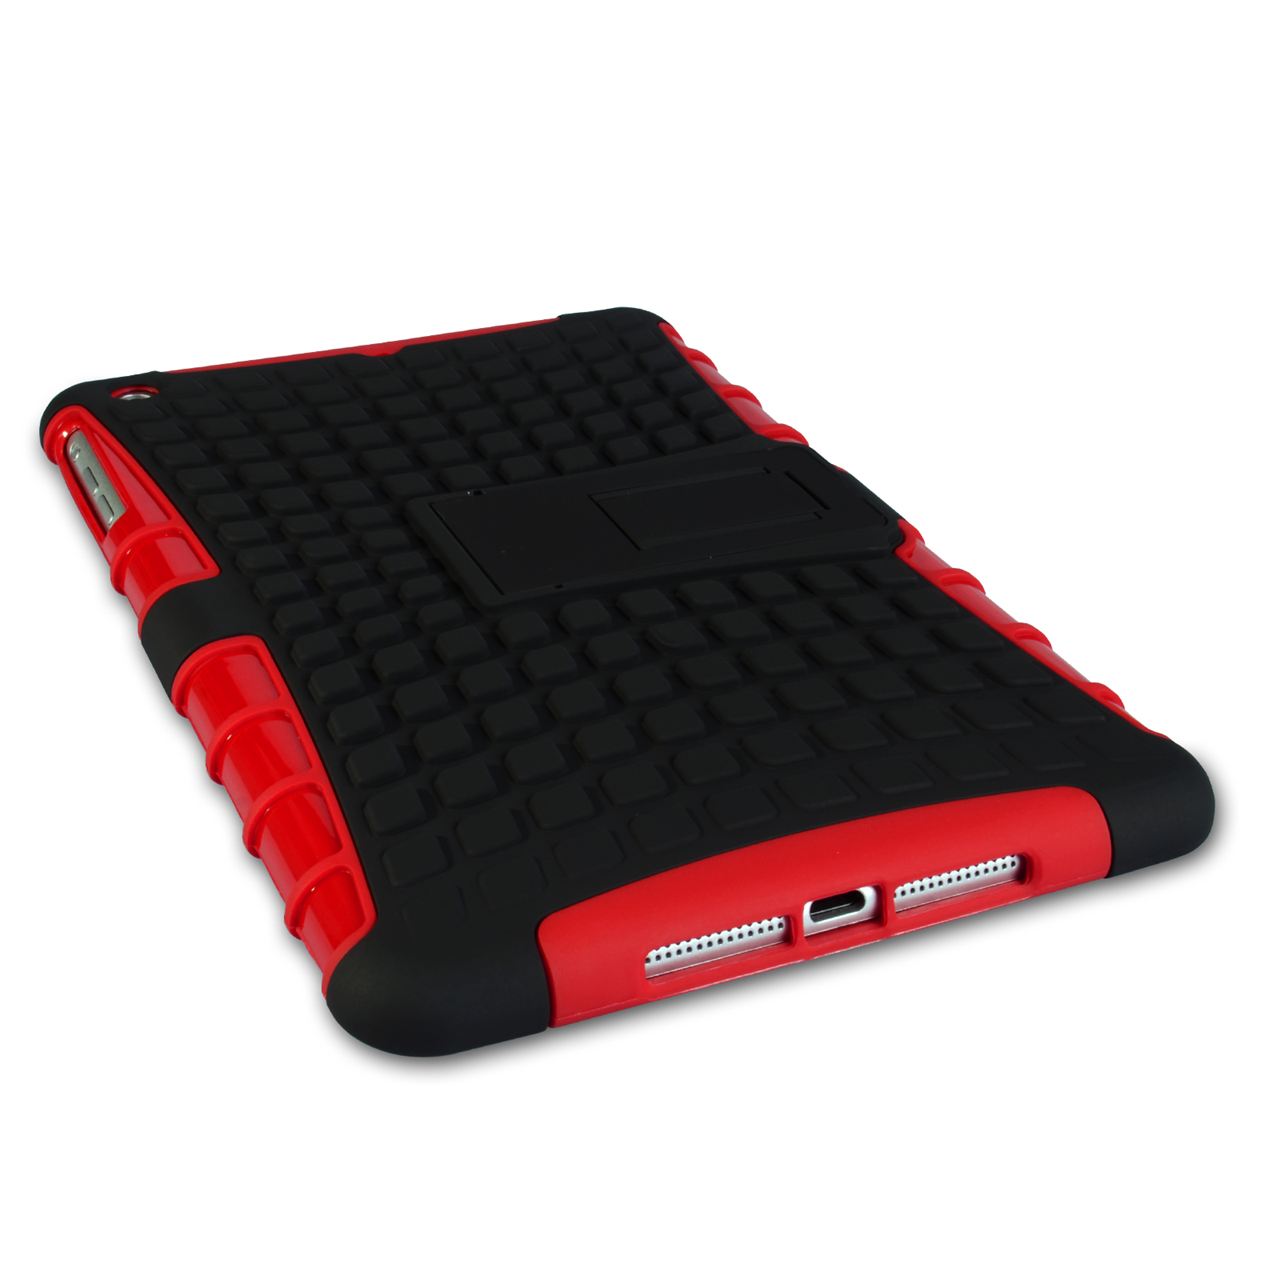 Caseflex iPad Mini 2 Tough Stand Cover - Red